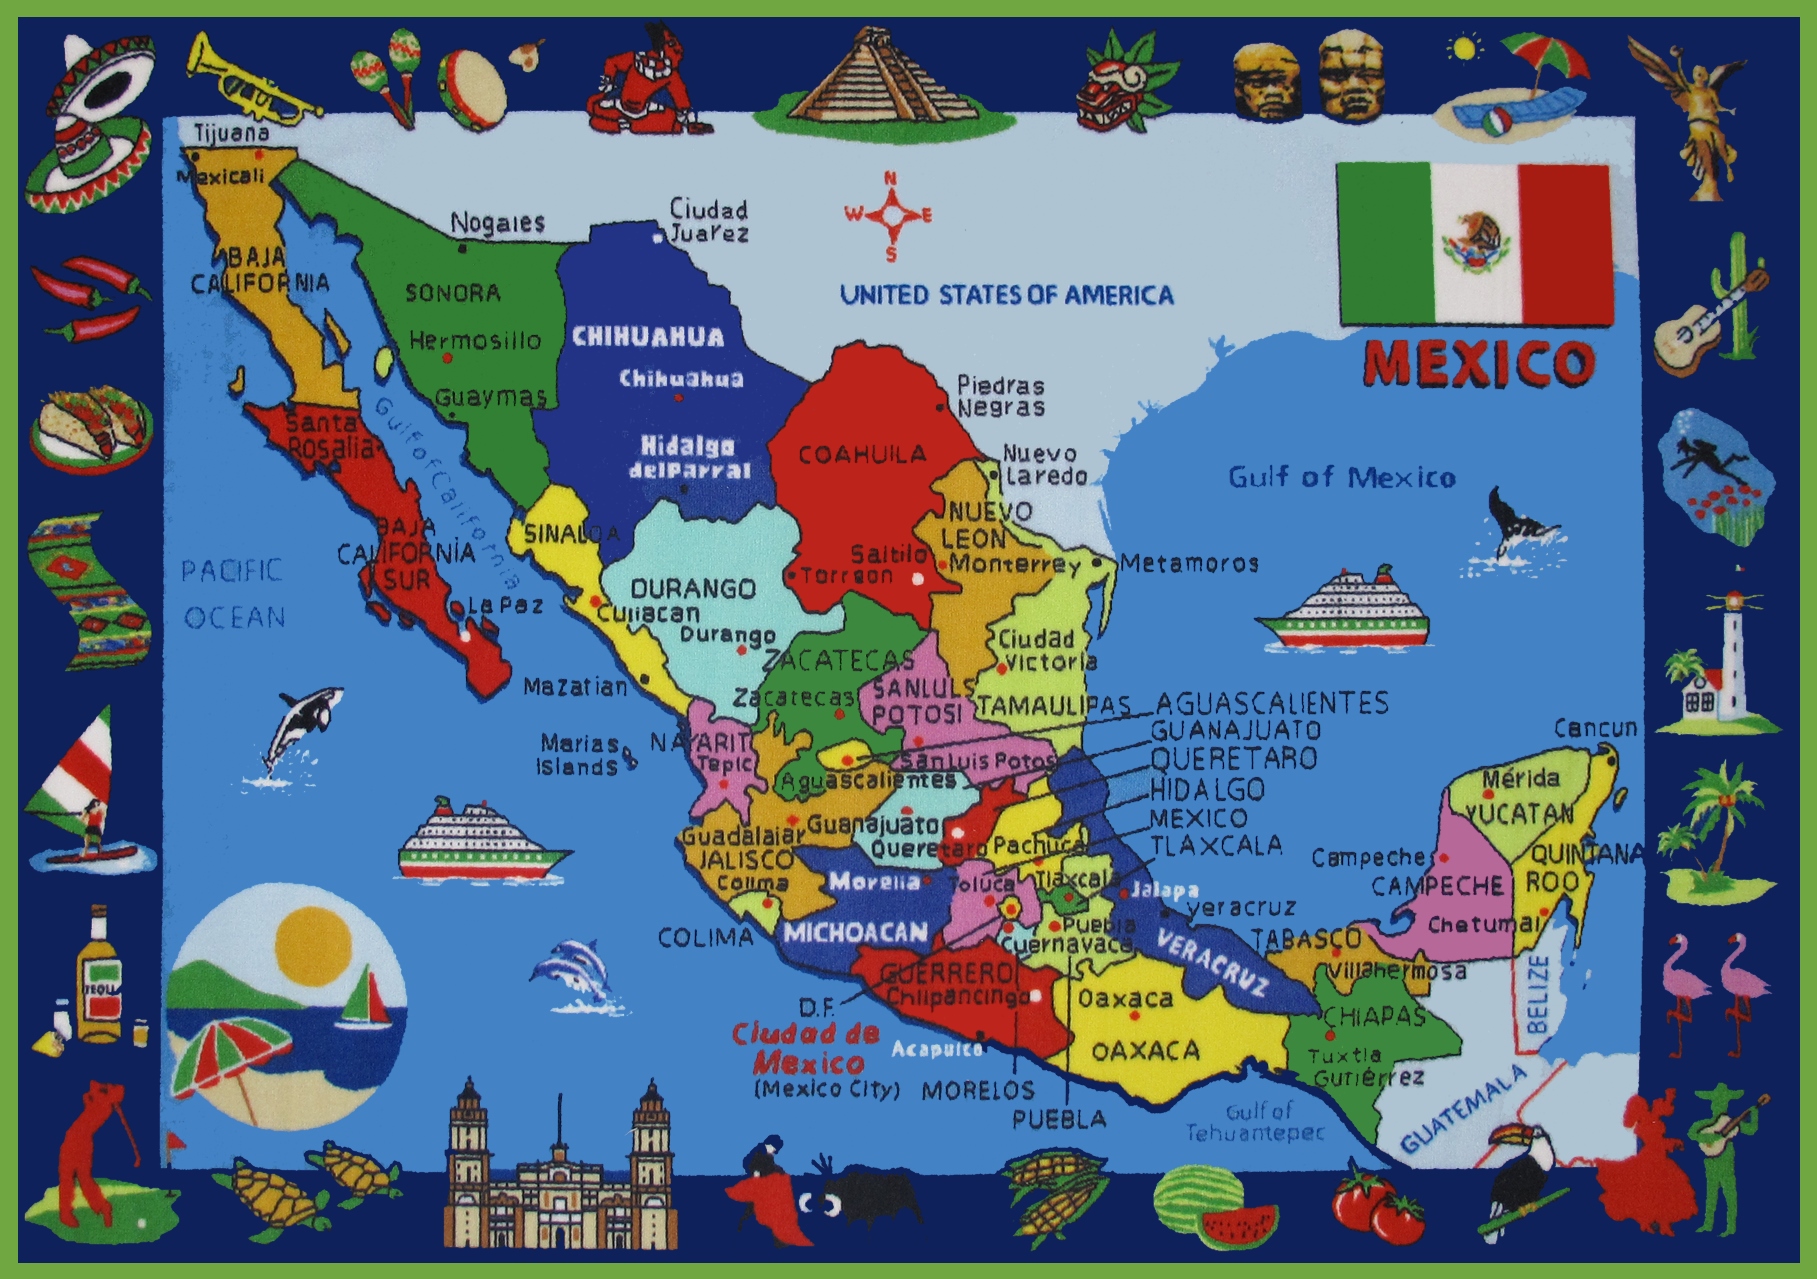 Mexico_Map.jpg